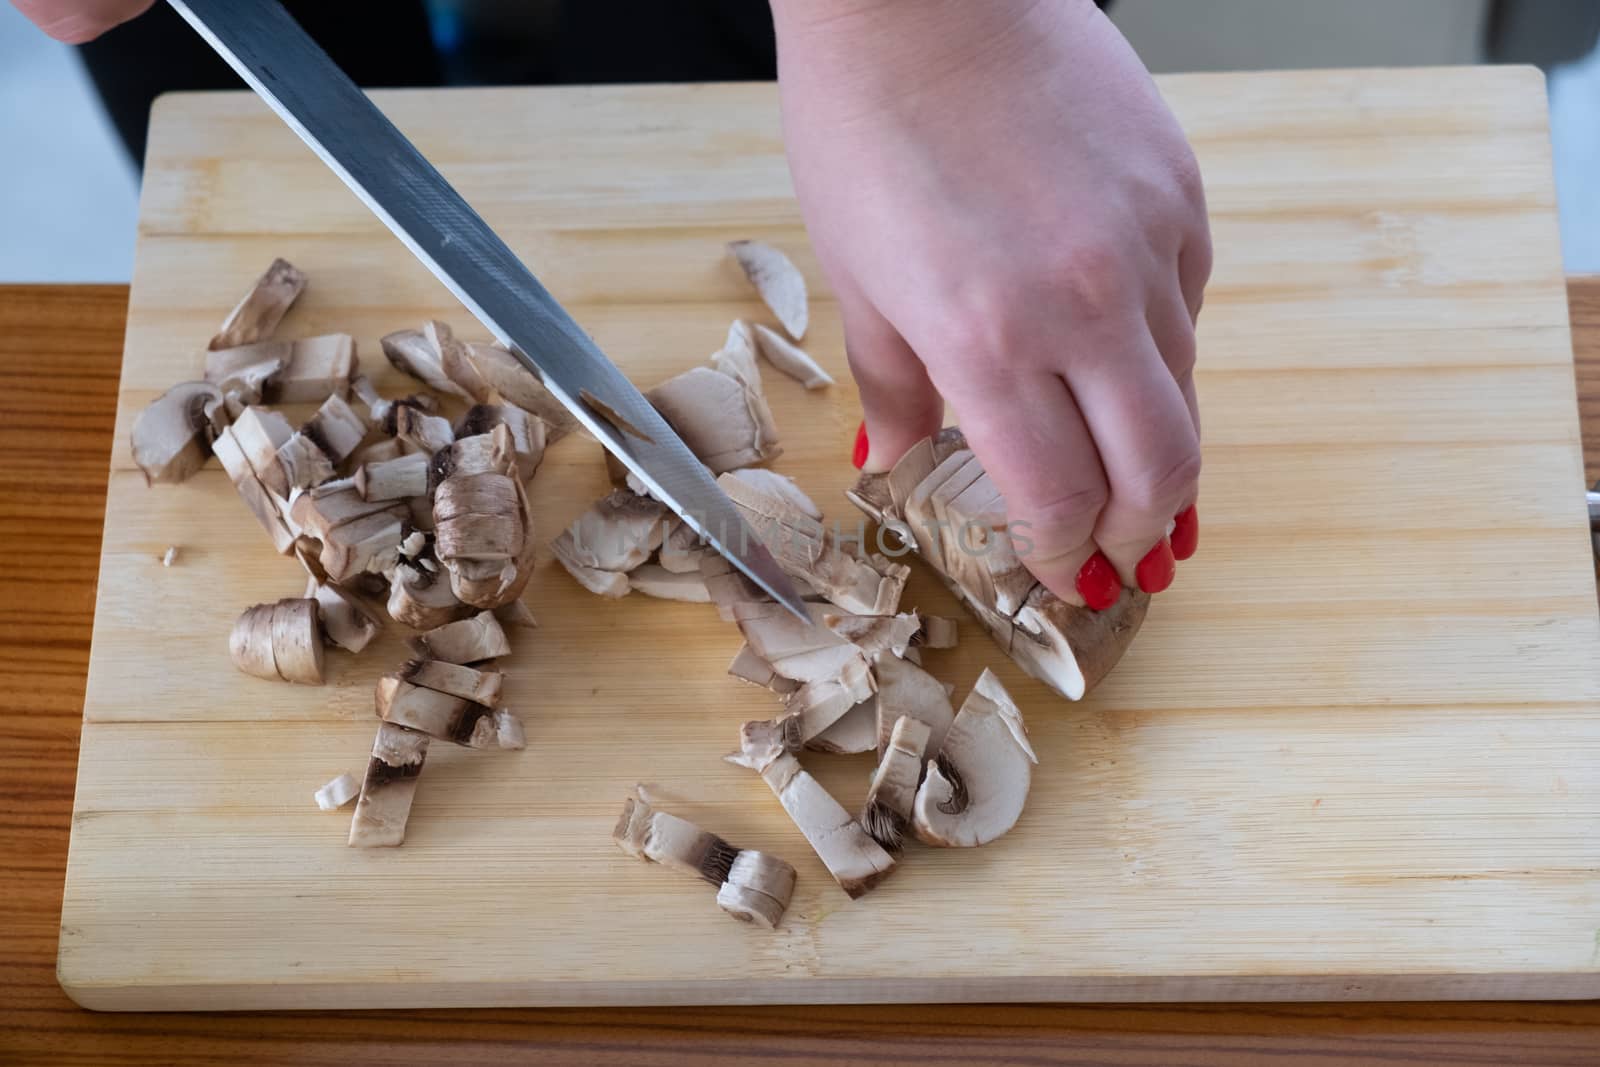 Woman cutting mushrooms on wooden board by rdv27